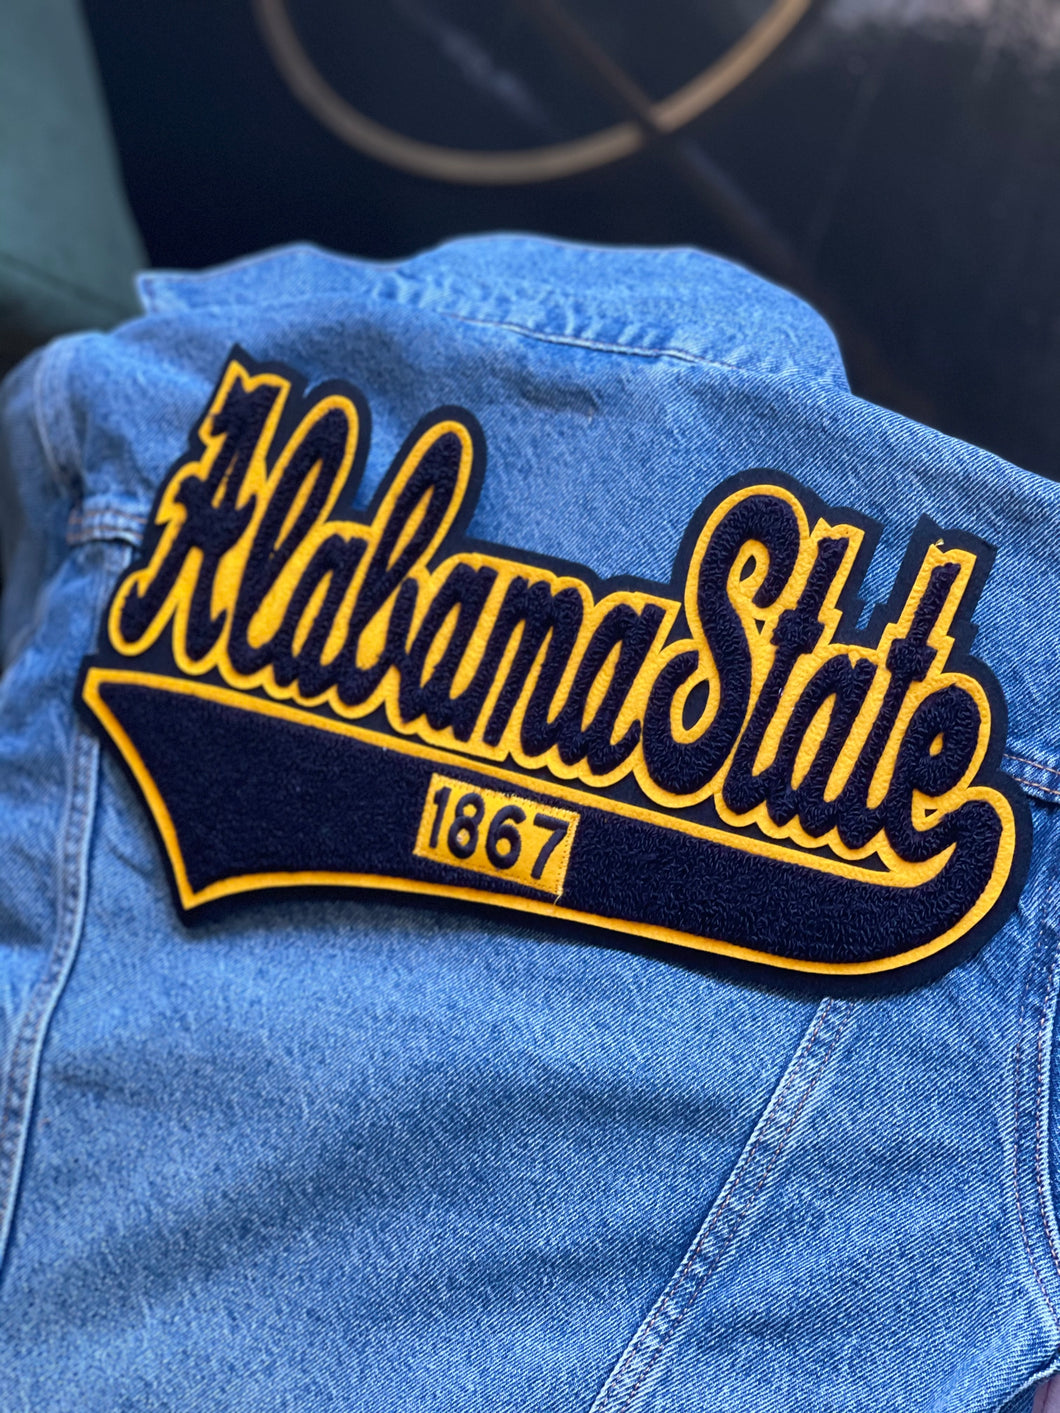 Alabama State University Denim Jacket